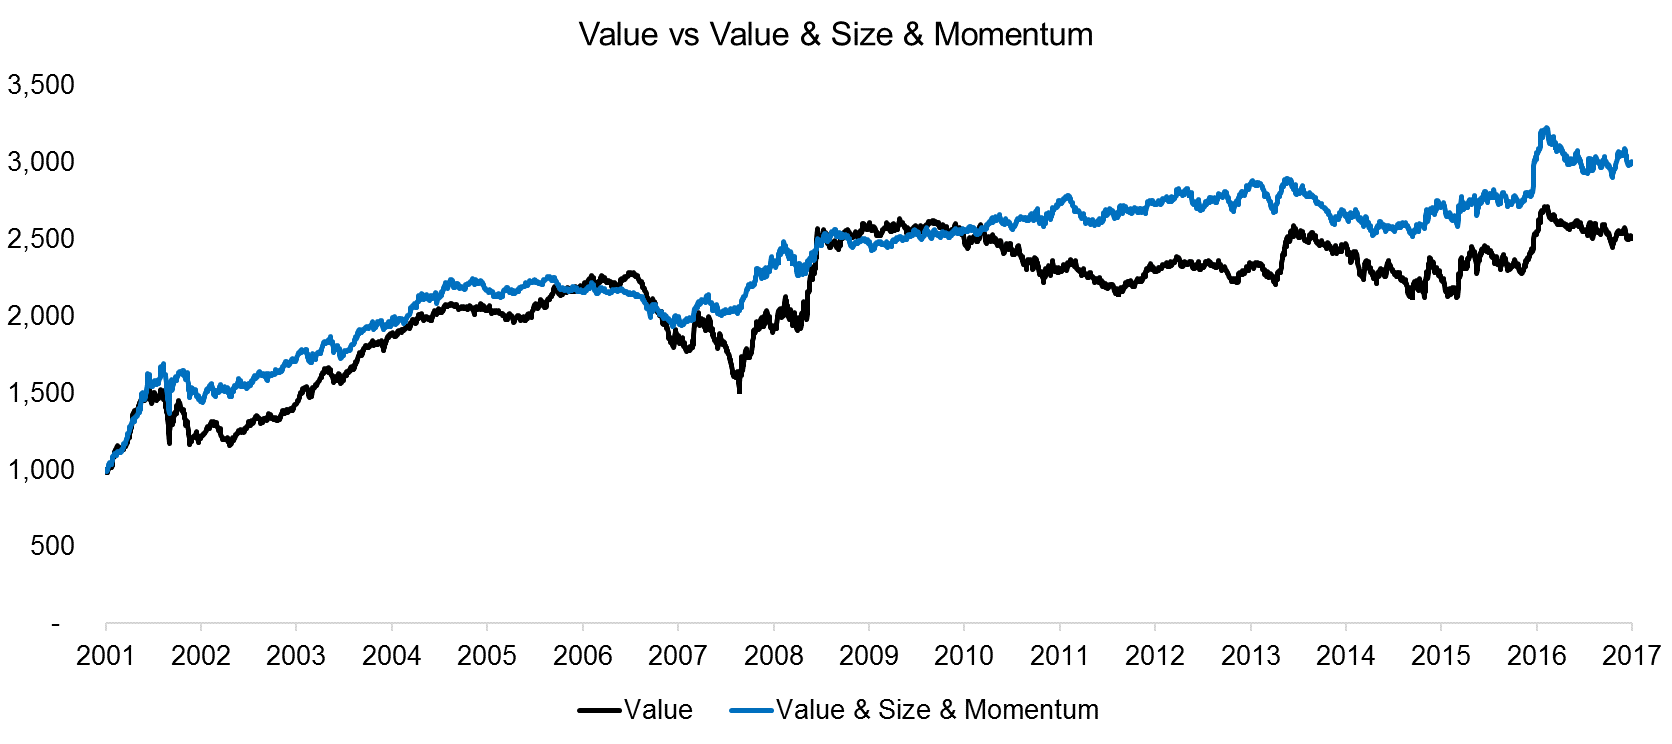 Value vs Value & Size & Momentum